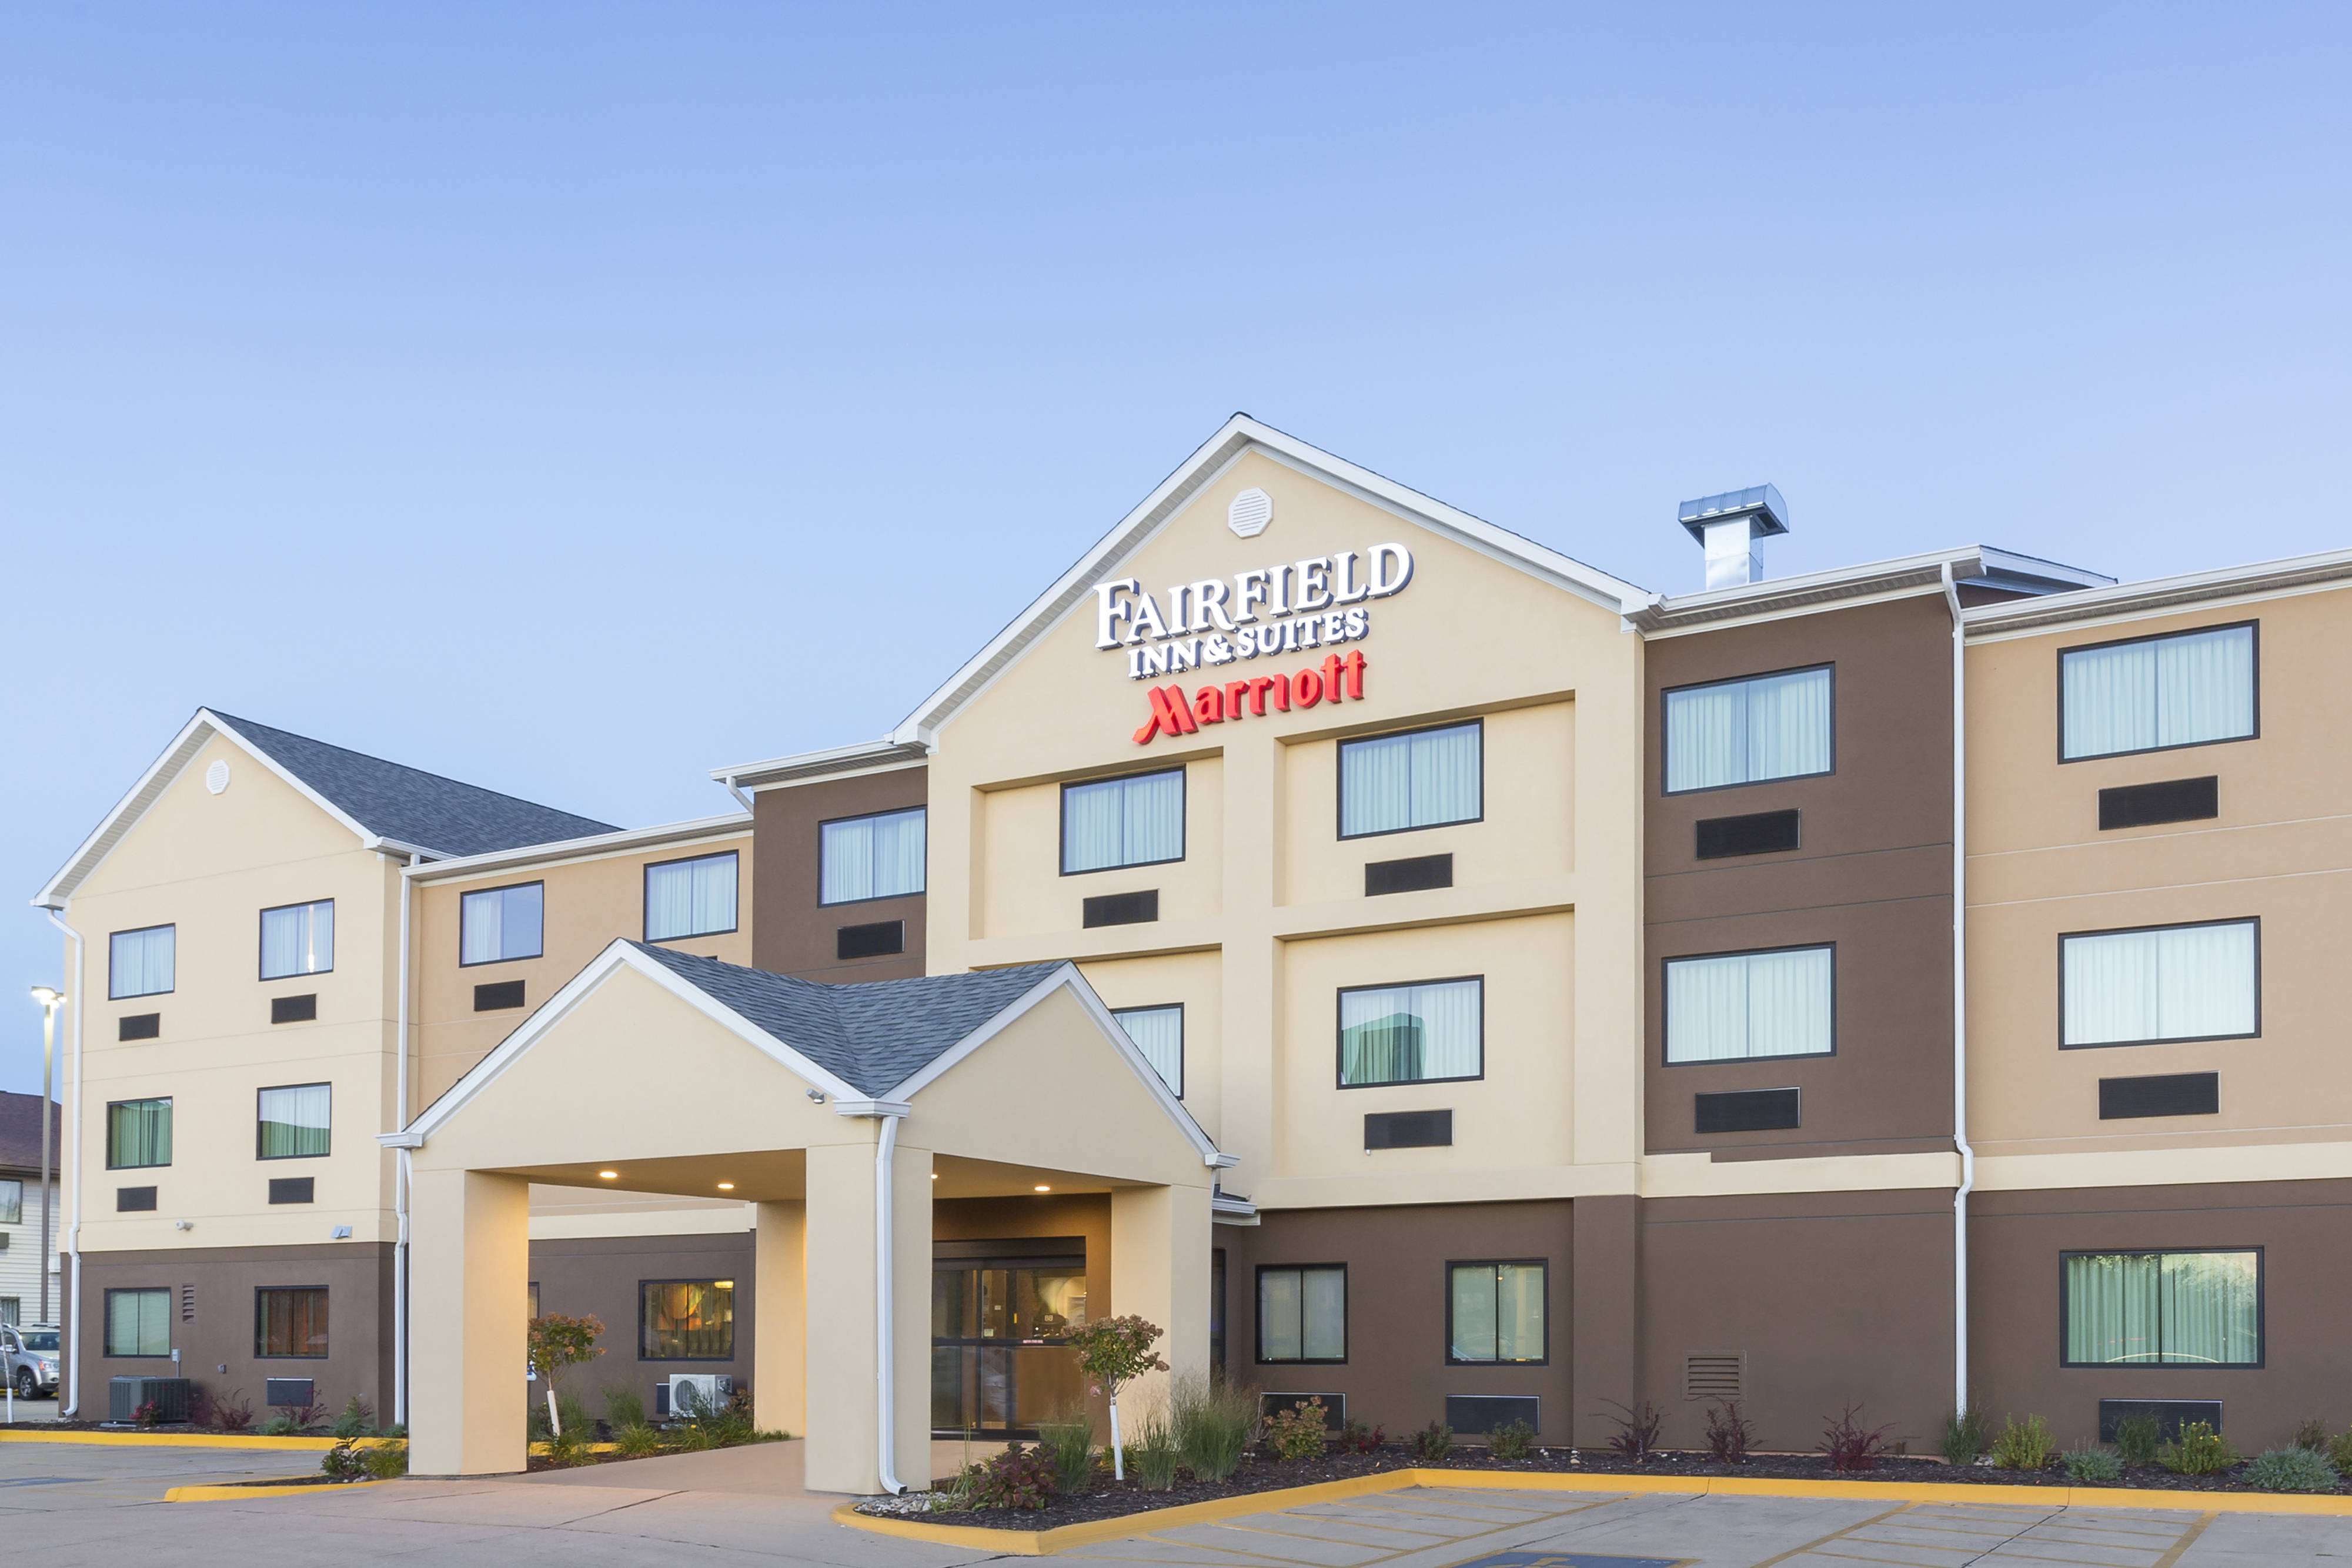 Photo of Fairfield Inn & Suites by Marriott Galesburg, Galesburg, IL